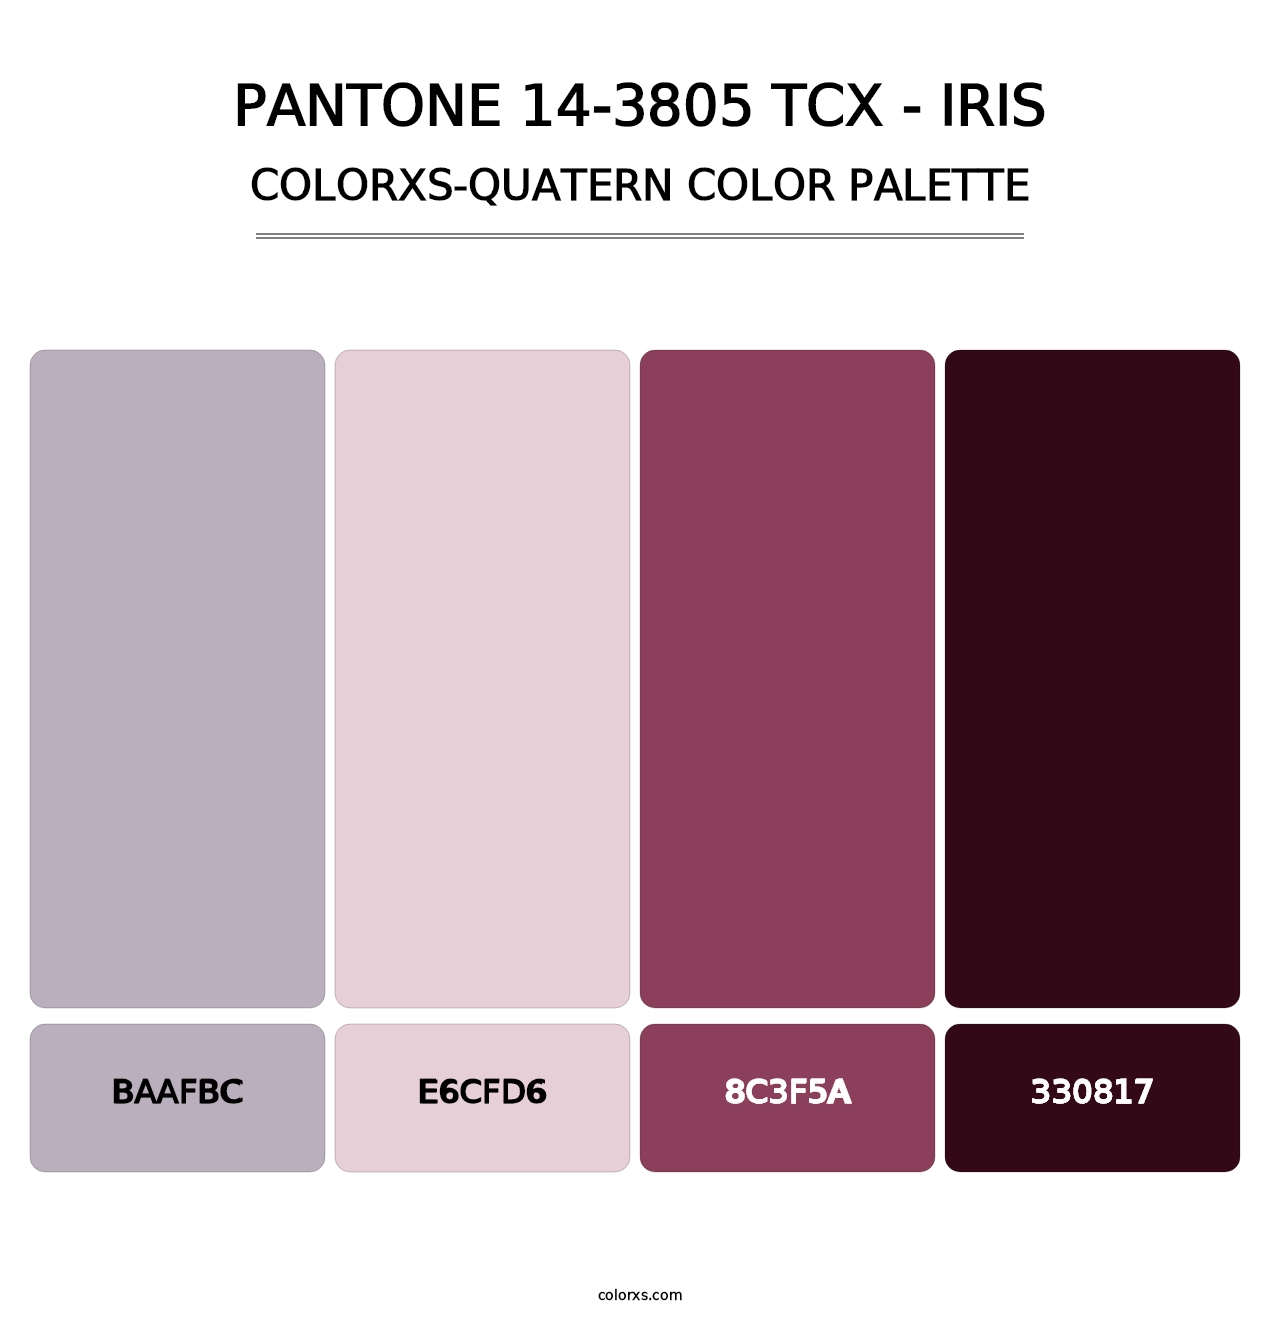 PANTONE 14-3805 TCX - Iris - Colorxs Quatern Palette